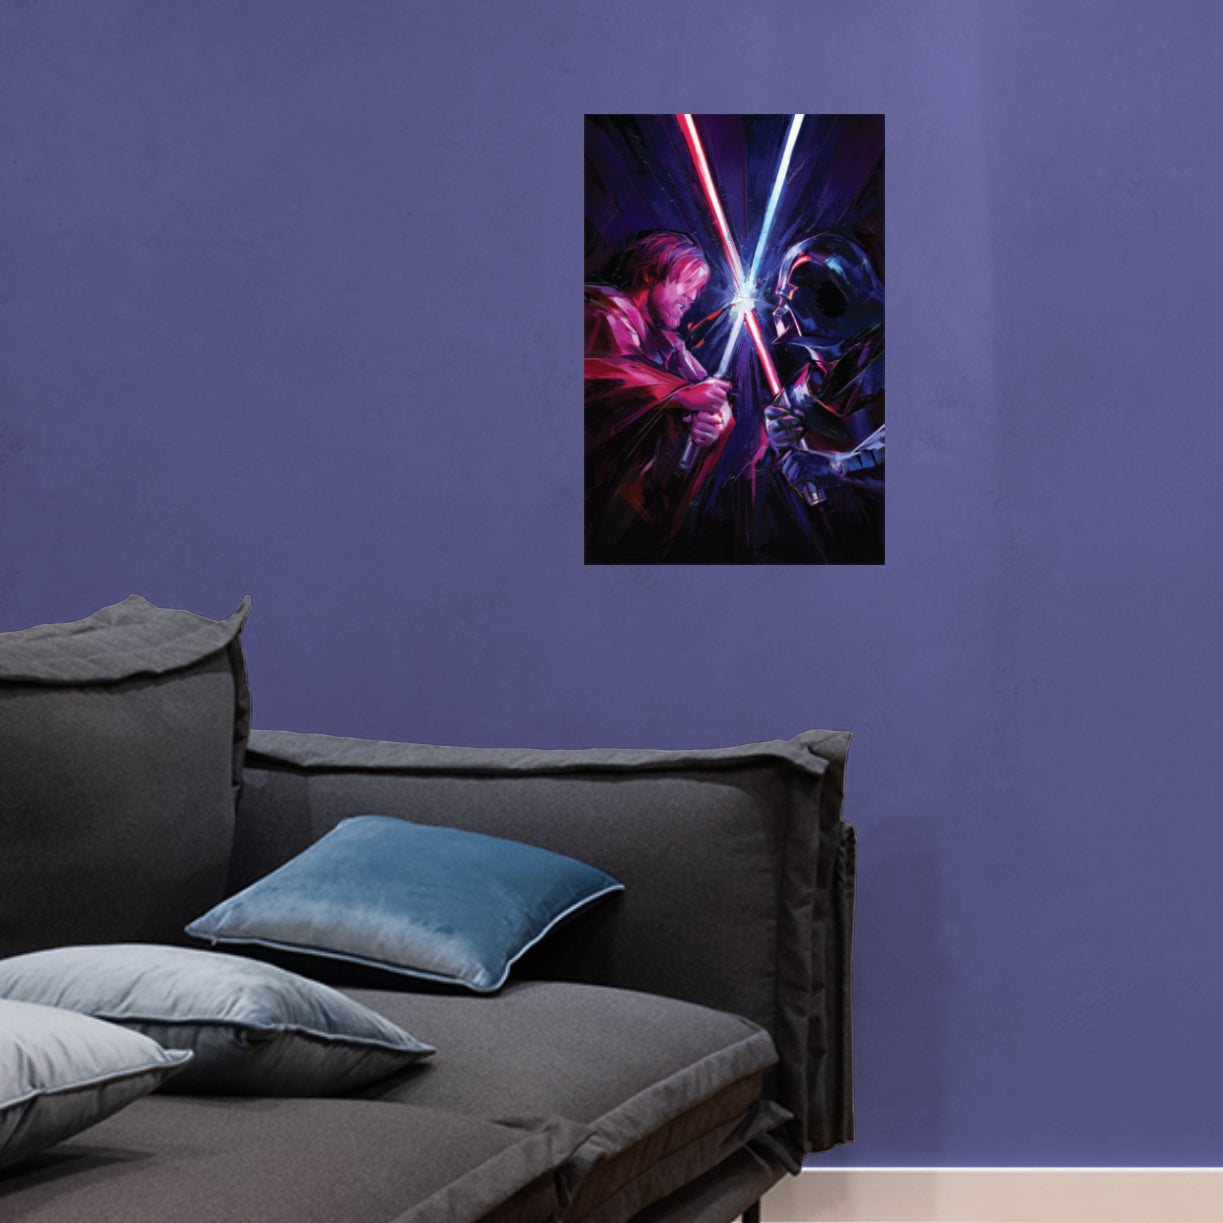 Obi-Wan Kenobi: Darth Vader & Obi-Wan Lightsaber Clash Poster - Officially Licensed Star Wars Removable Adhesive Decal